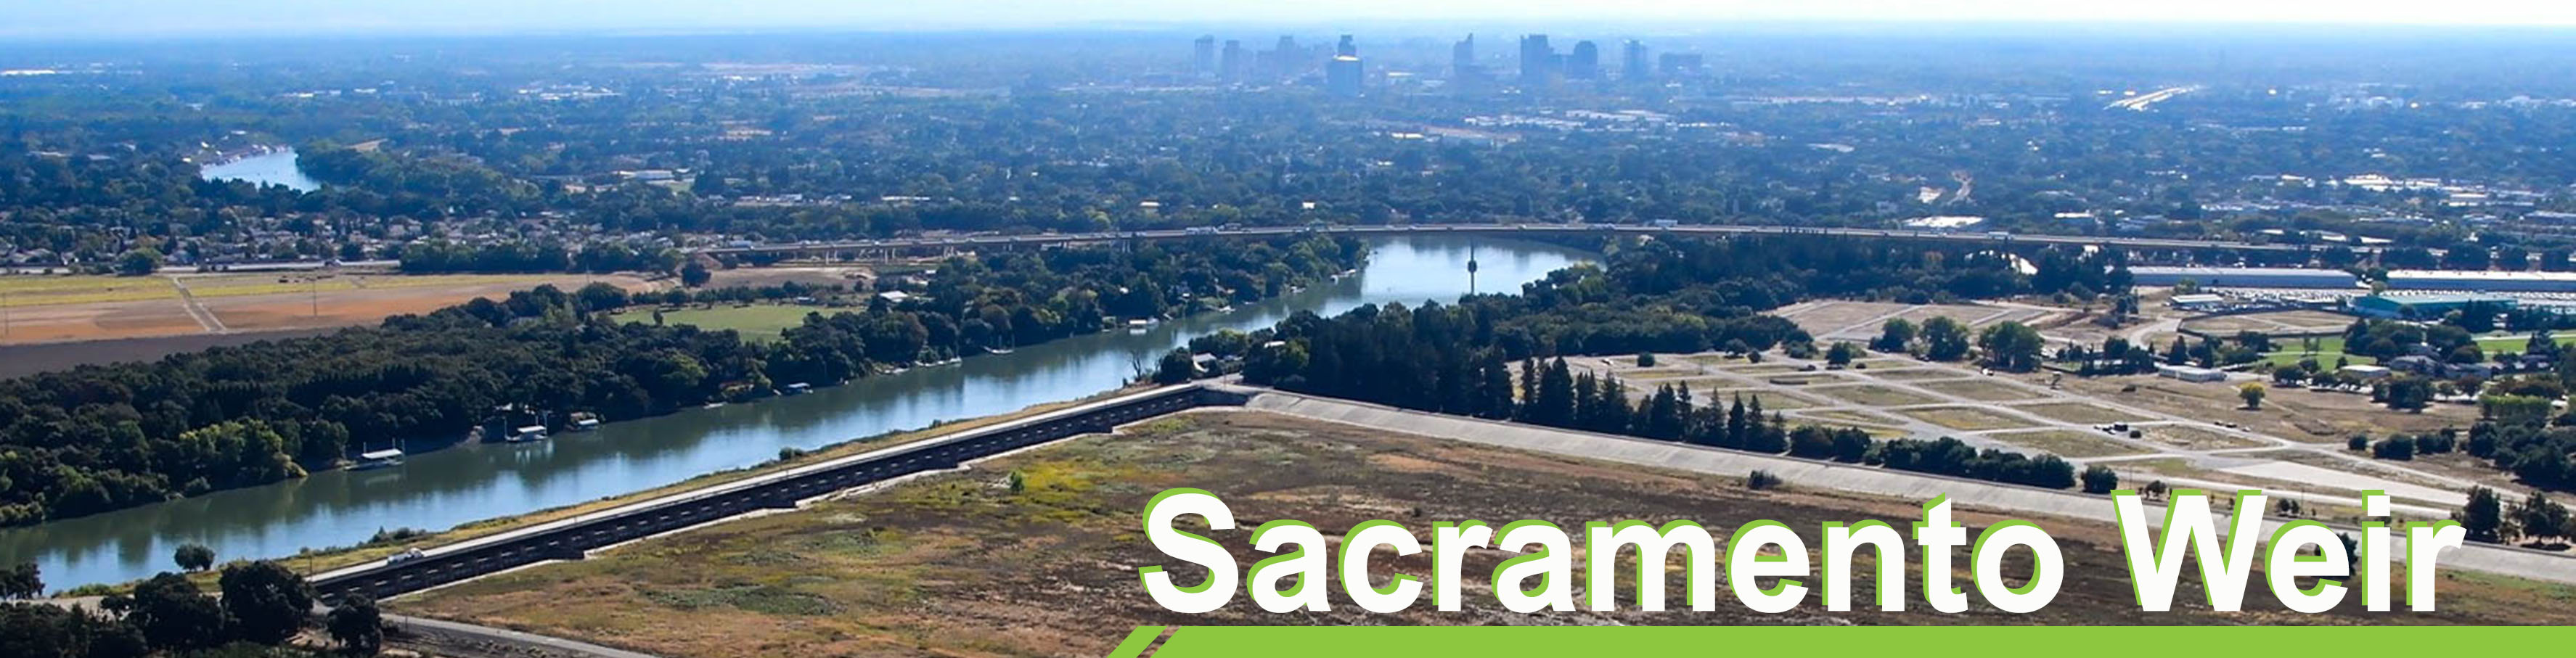 Banner - Sacramento Weir